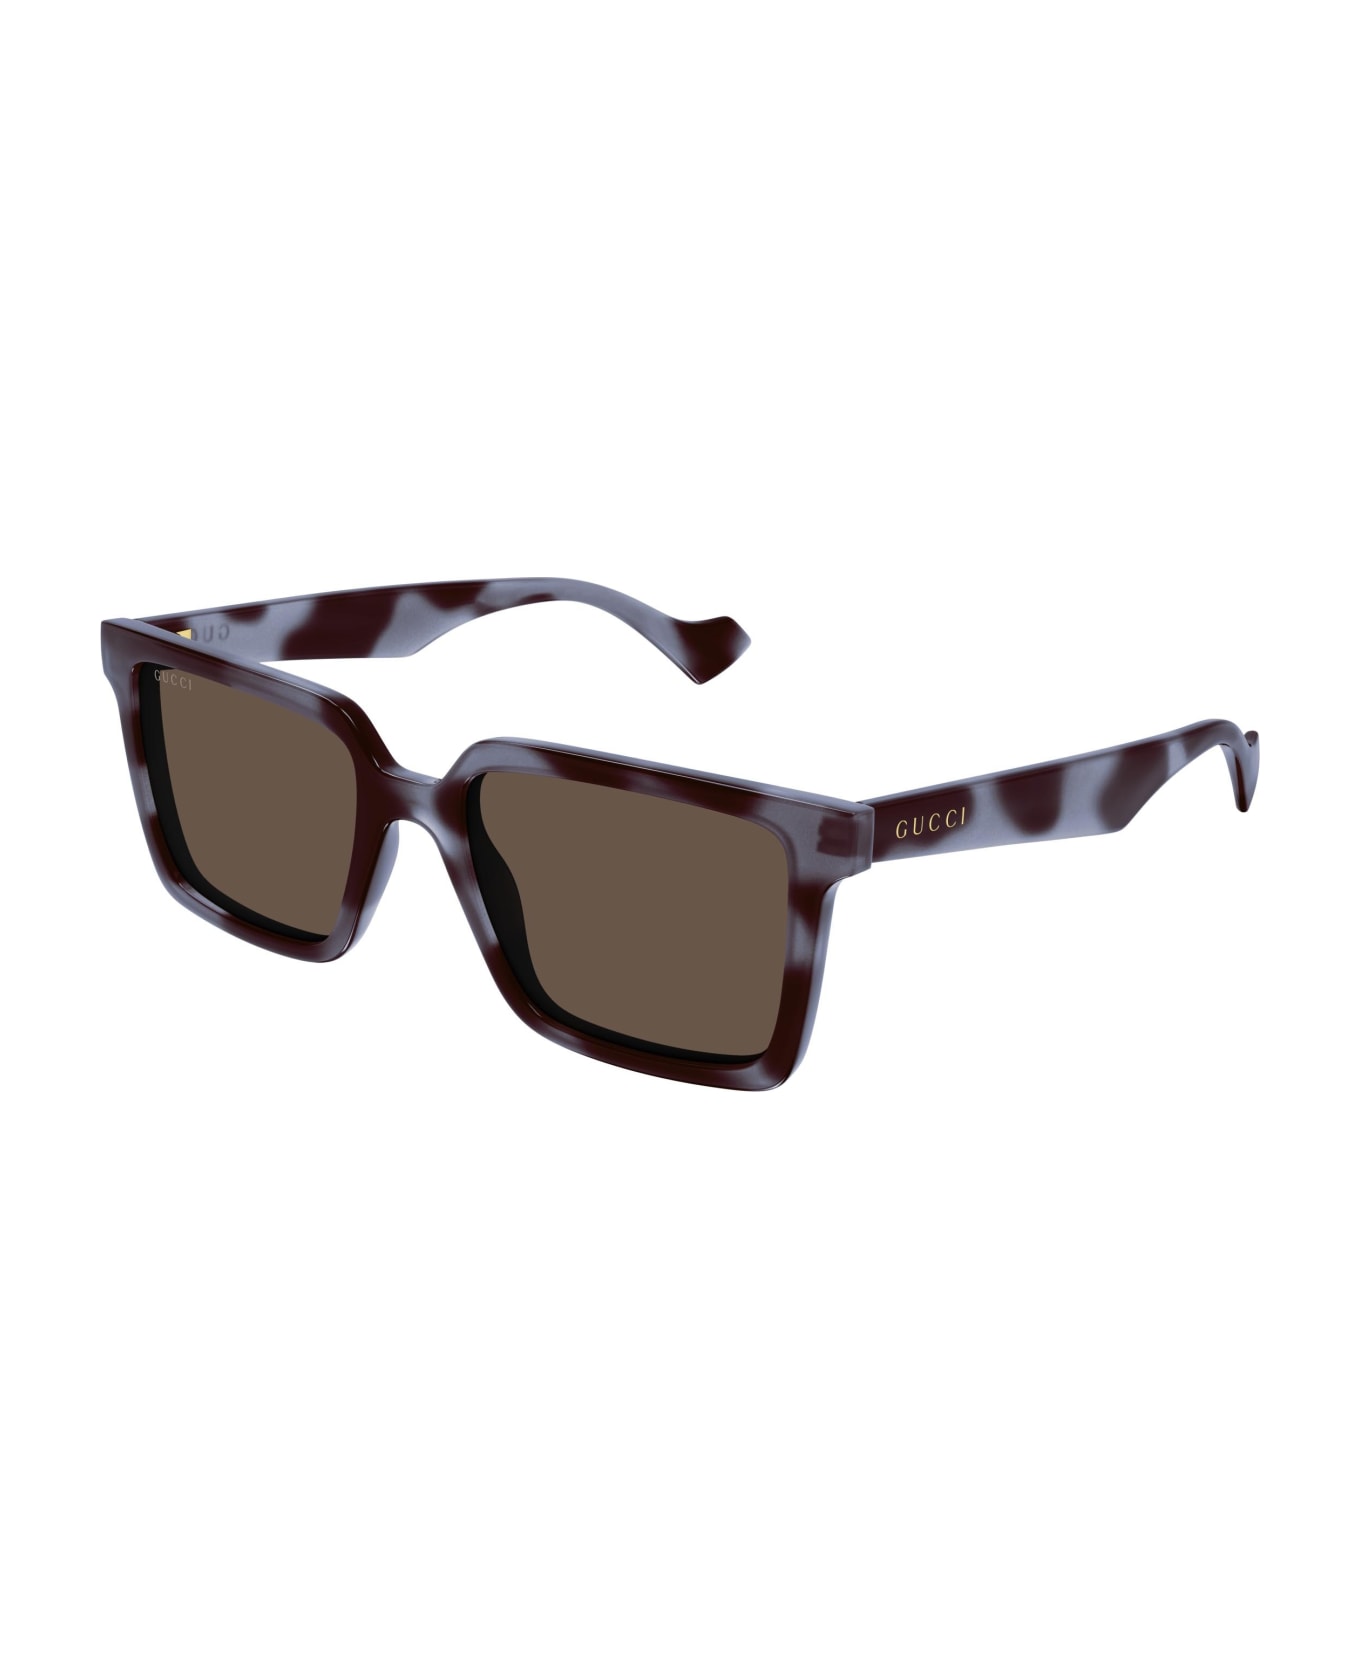 Gucci Eyewear Sunglasses - Grigio/Marrone